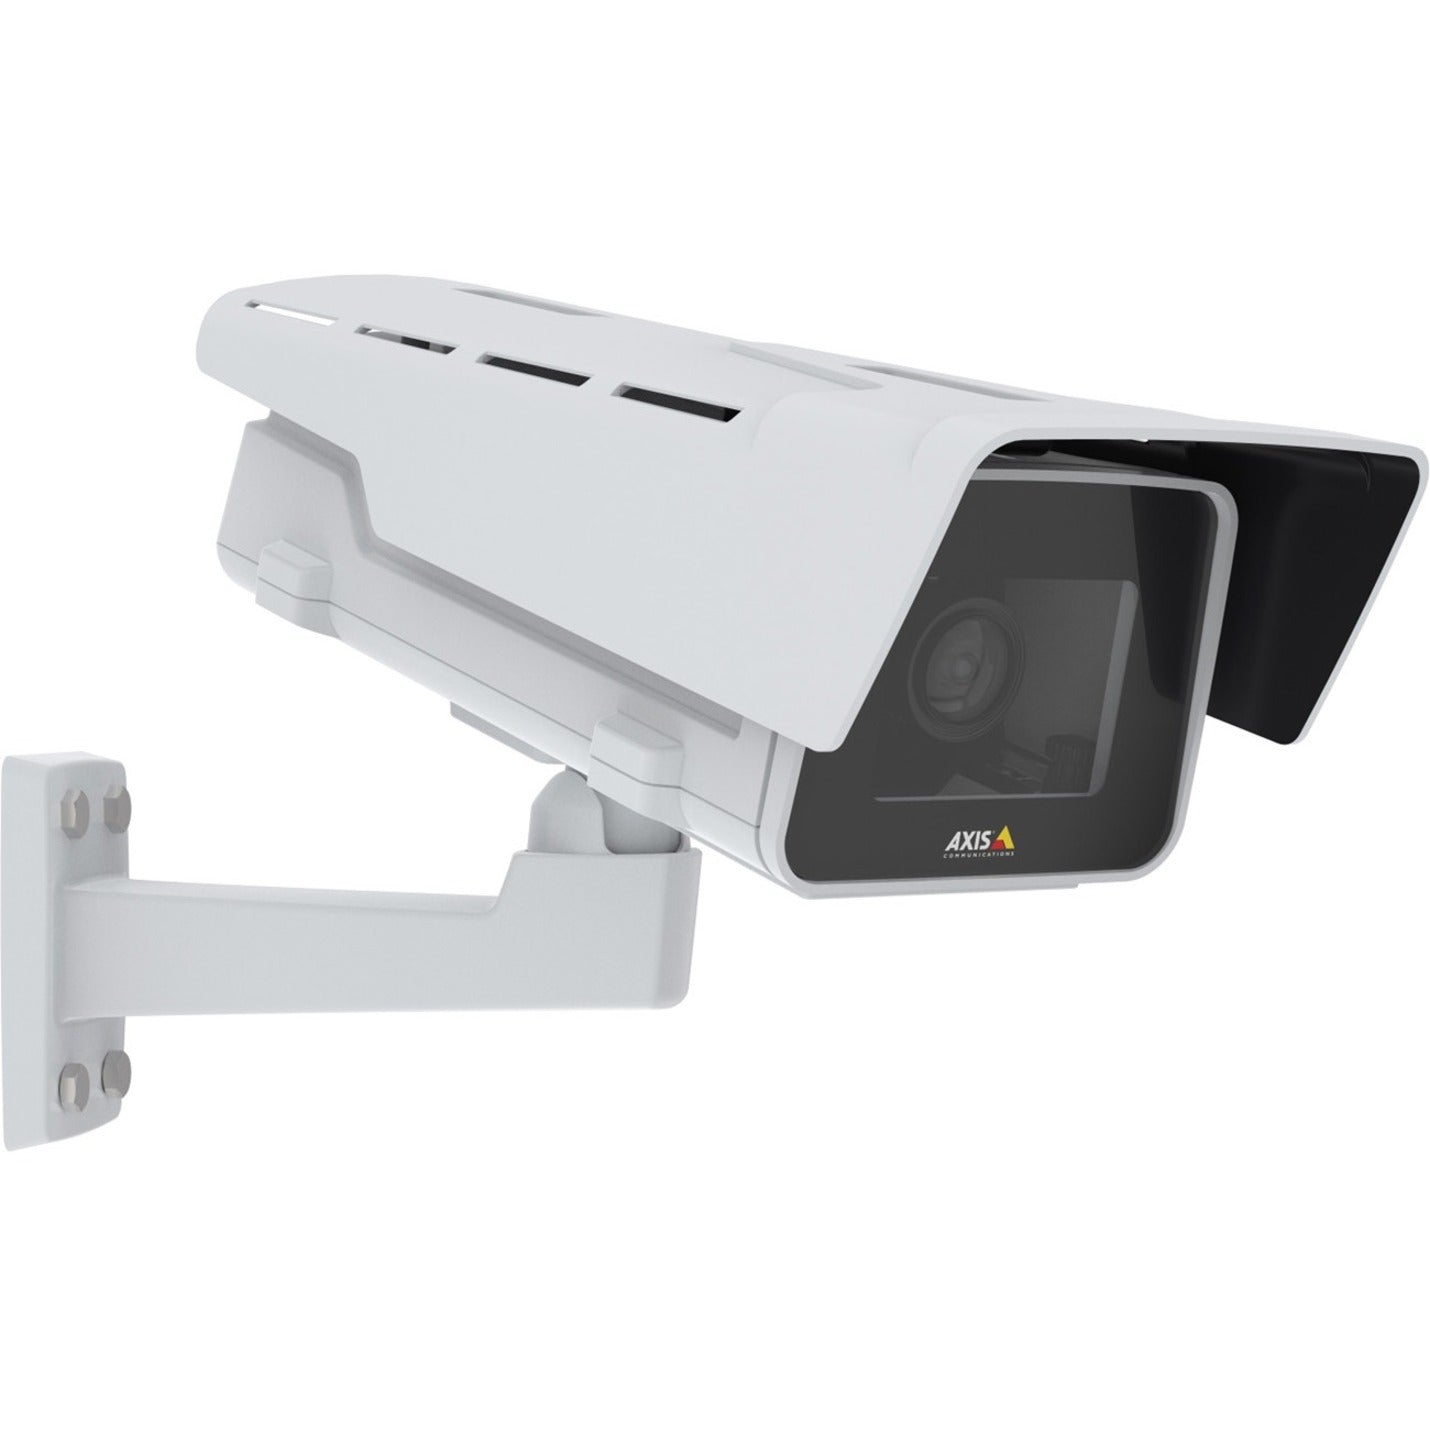 AXIS 01533-001 P1375-E Network Camera, 2 Megapixel Outdoor Full HD, Varifocal Lens, 3.5x Optical Zoom, Memory Card Storage, Tampering Alarm, IK10 Impact Protection, IP66/IP67 Ingress Protection